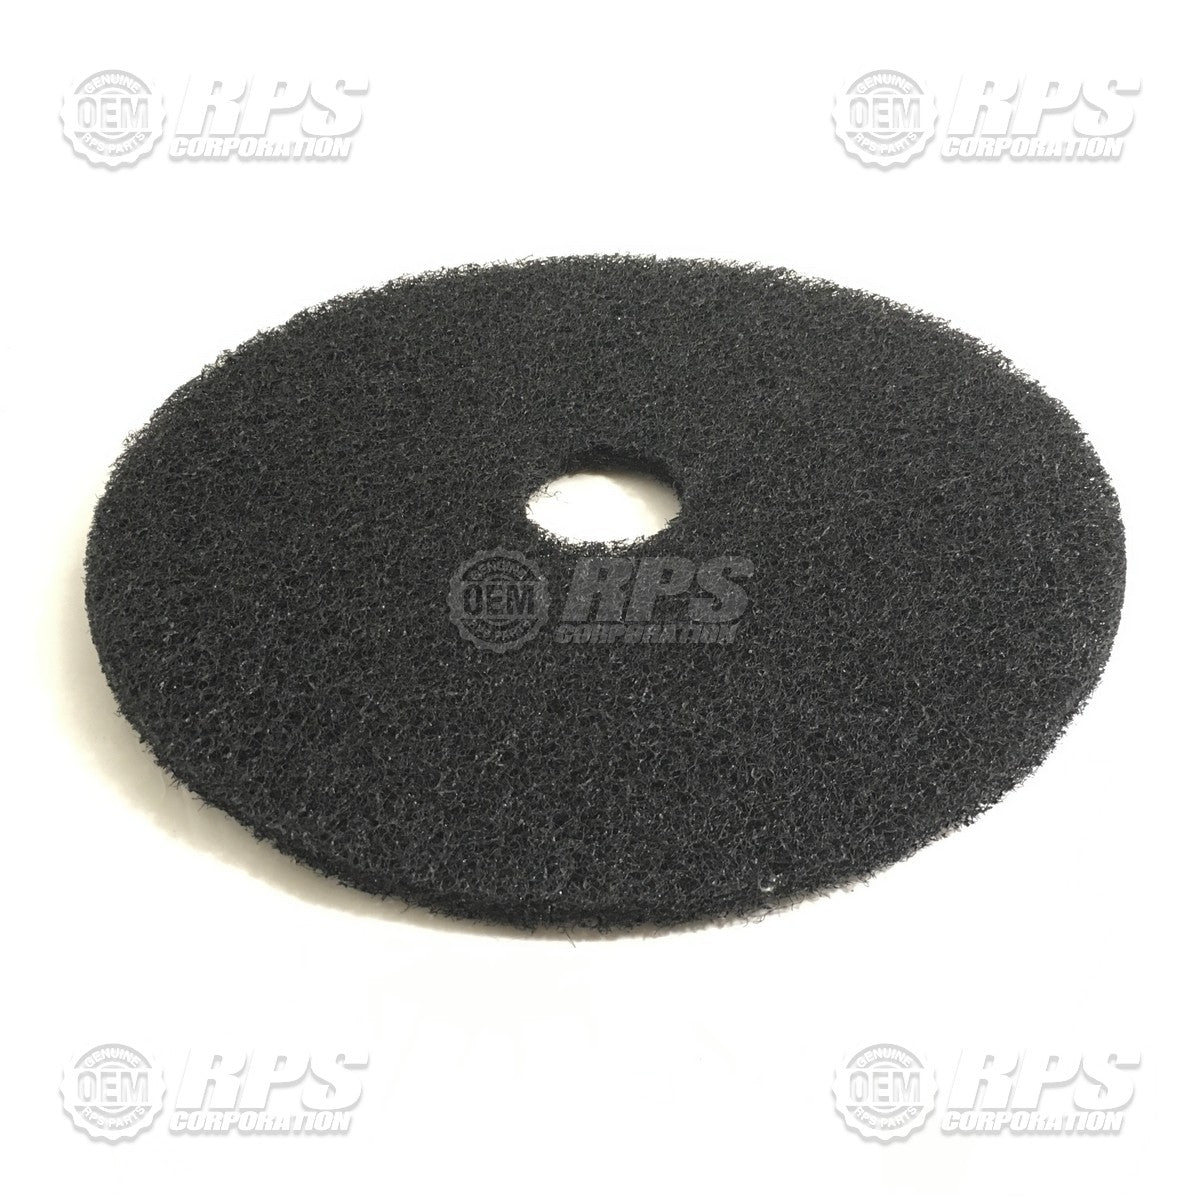 FactoryCat/Tomcat 13-422BB, Floor Pads, 13" Super Black - Case of 5 pads